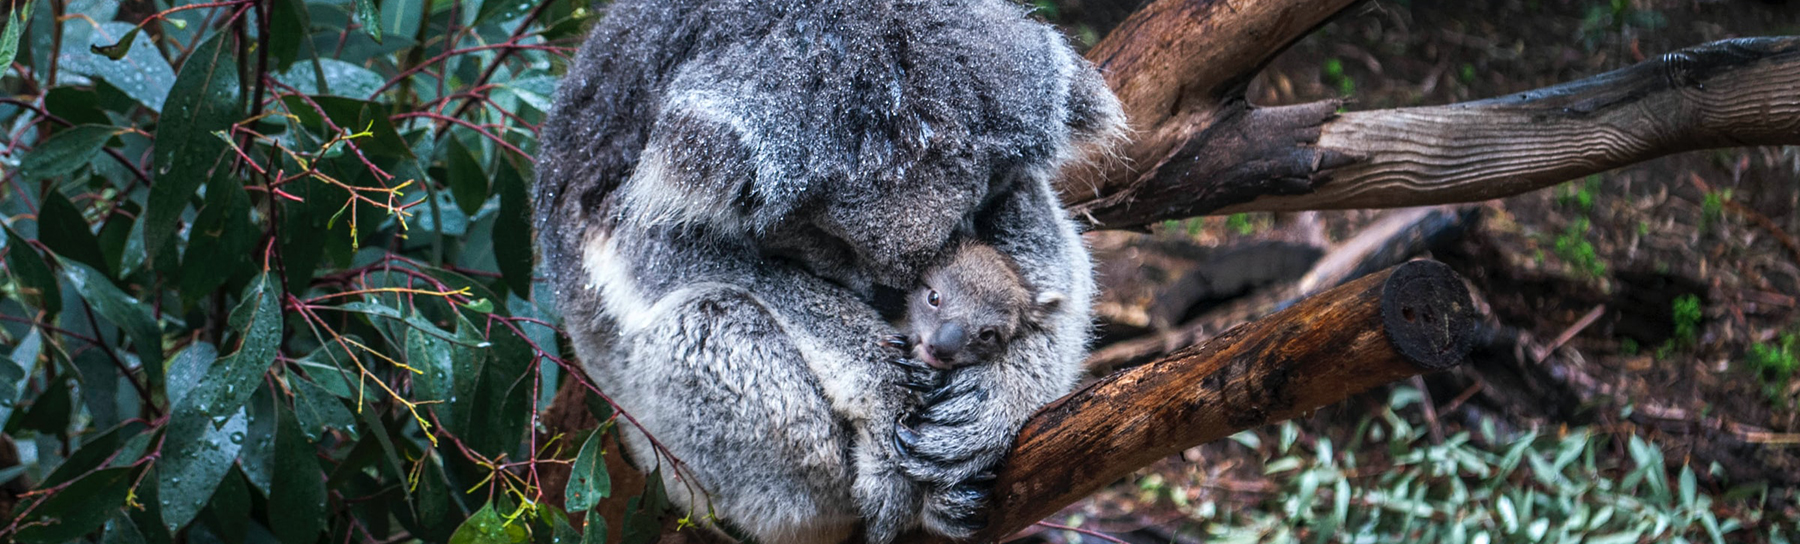 Save-Koala-appeal-j-perez-unsplash.jpg